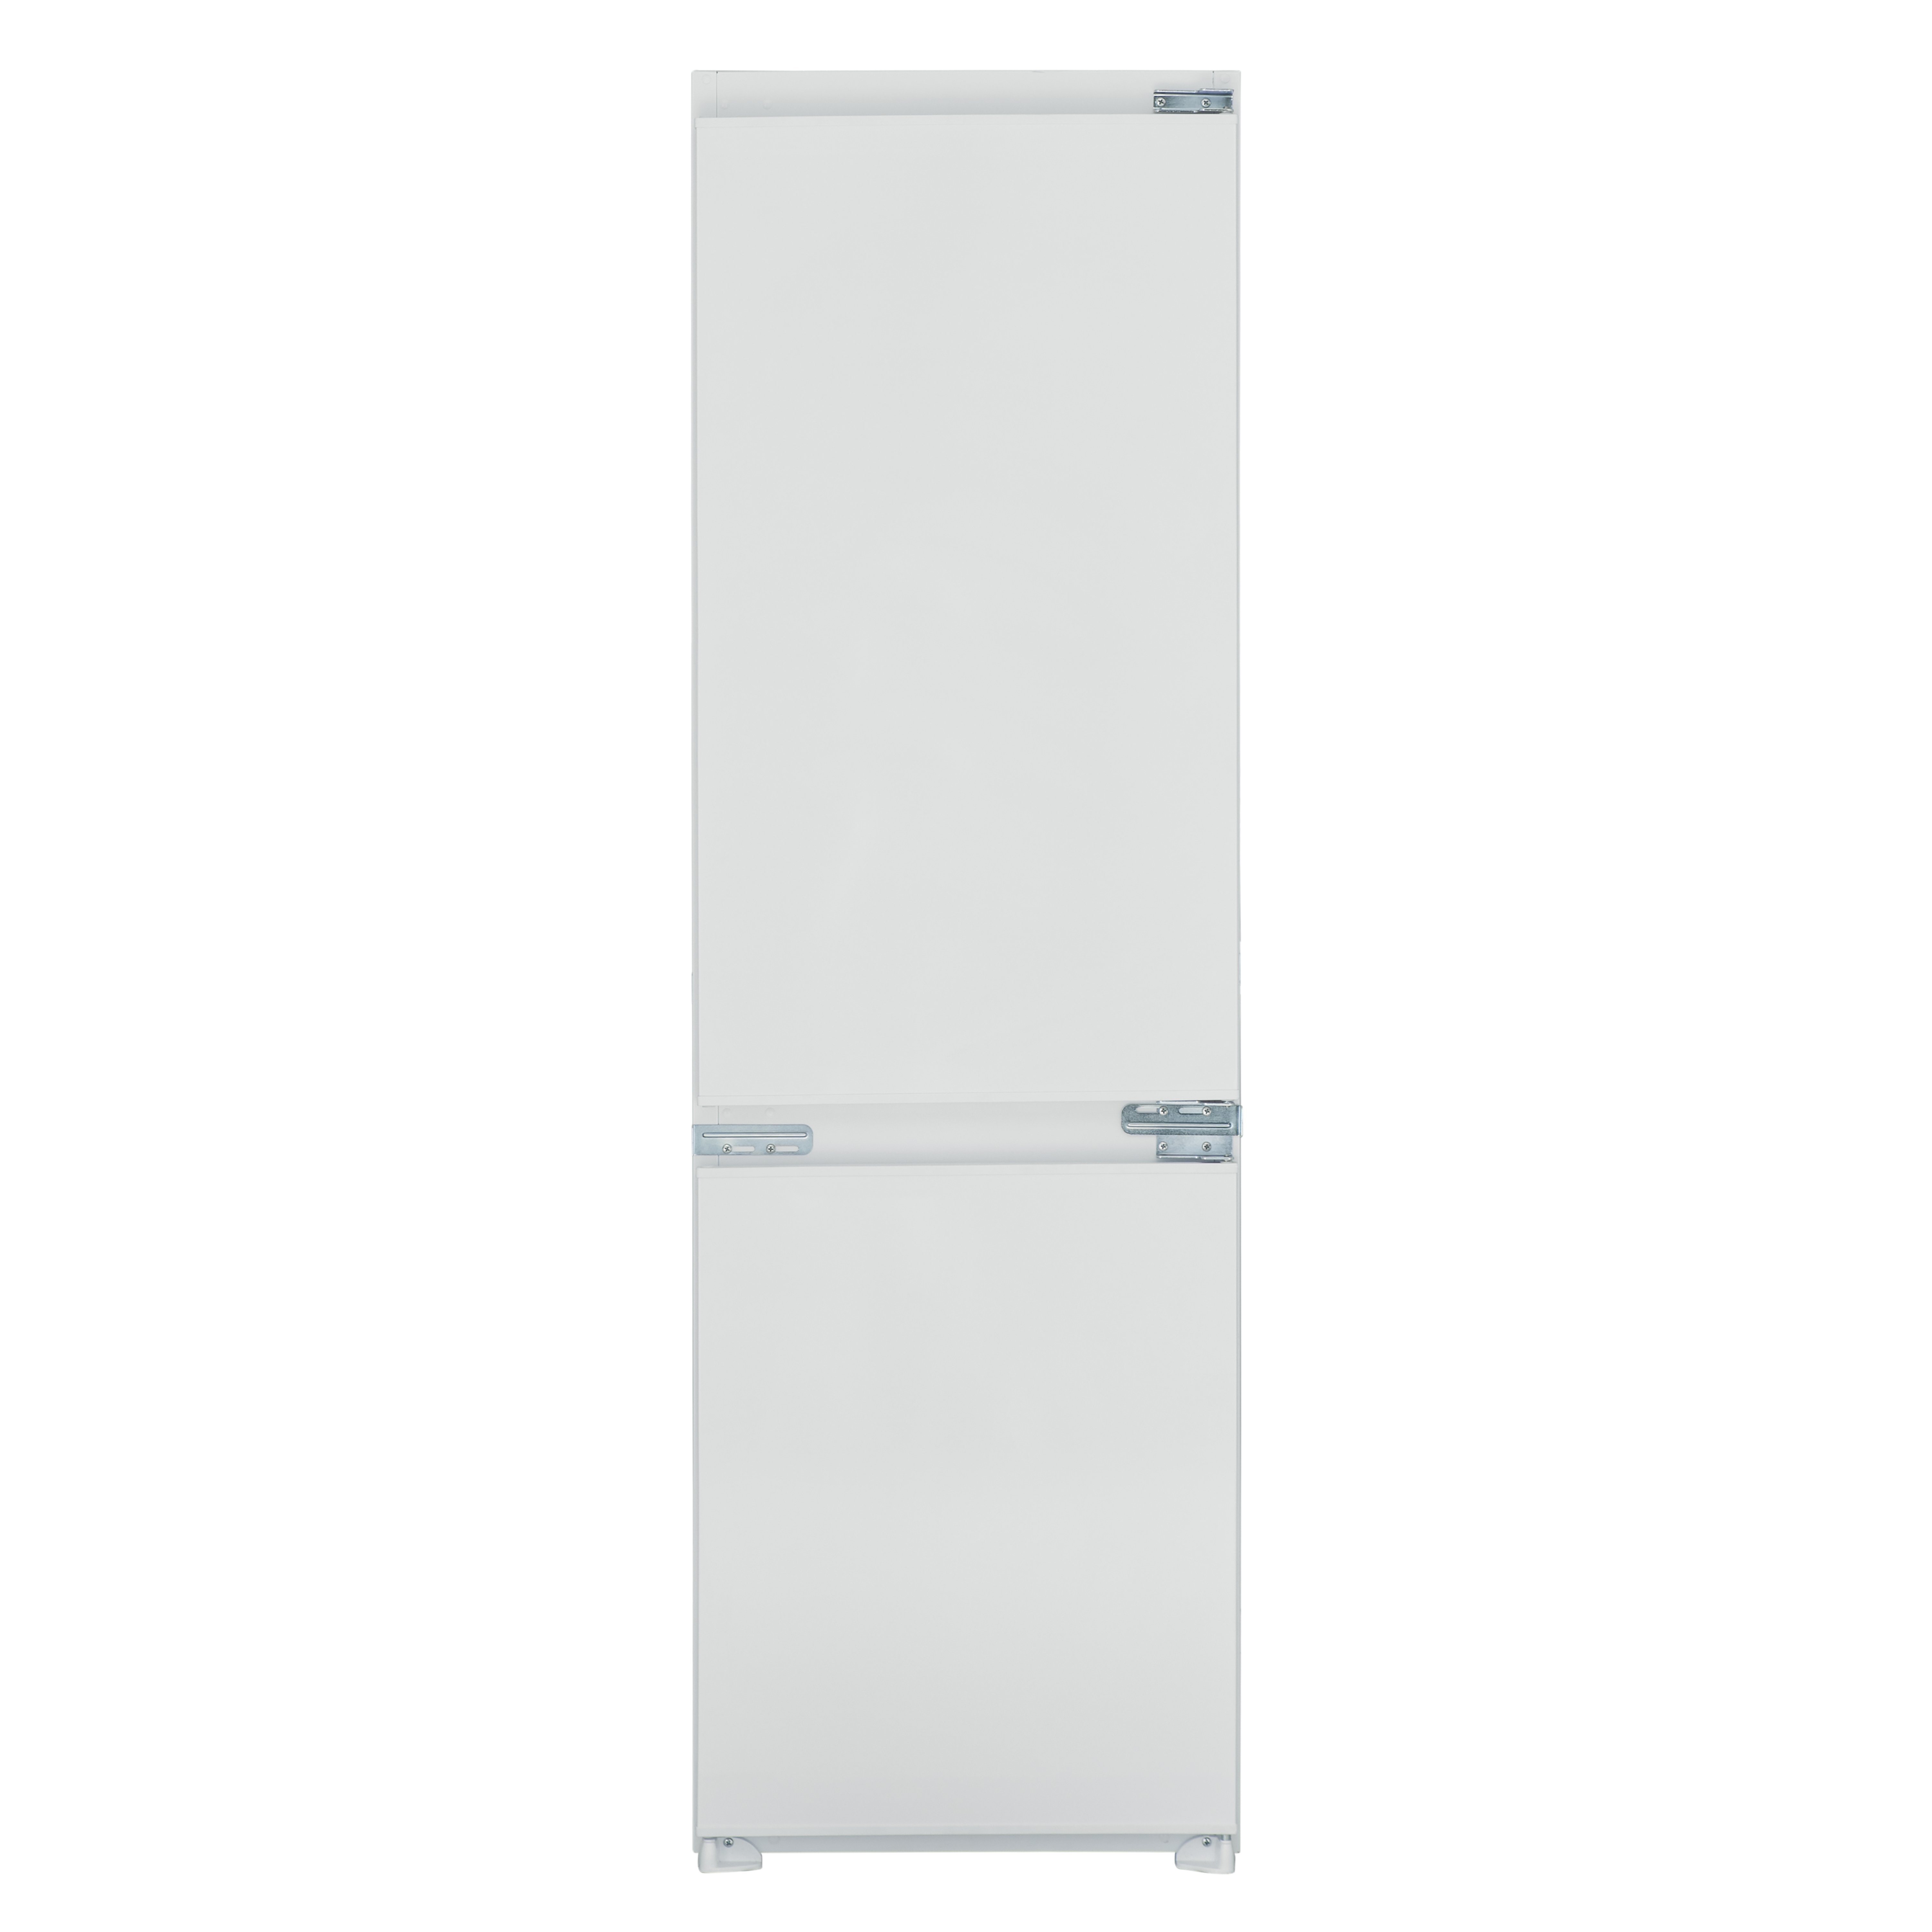 60cm fridge freezer, 181L fridge & 75L freezer gross capacity. Features a manual thermostat, reversible doors and auto defrost. 